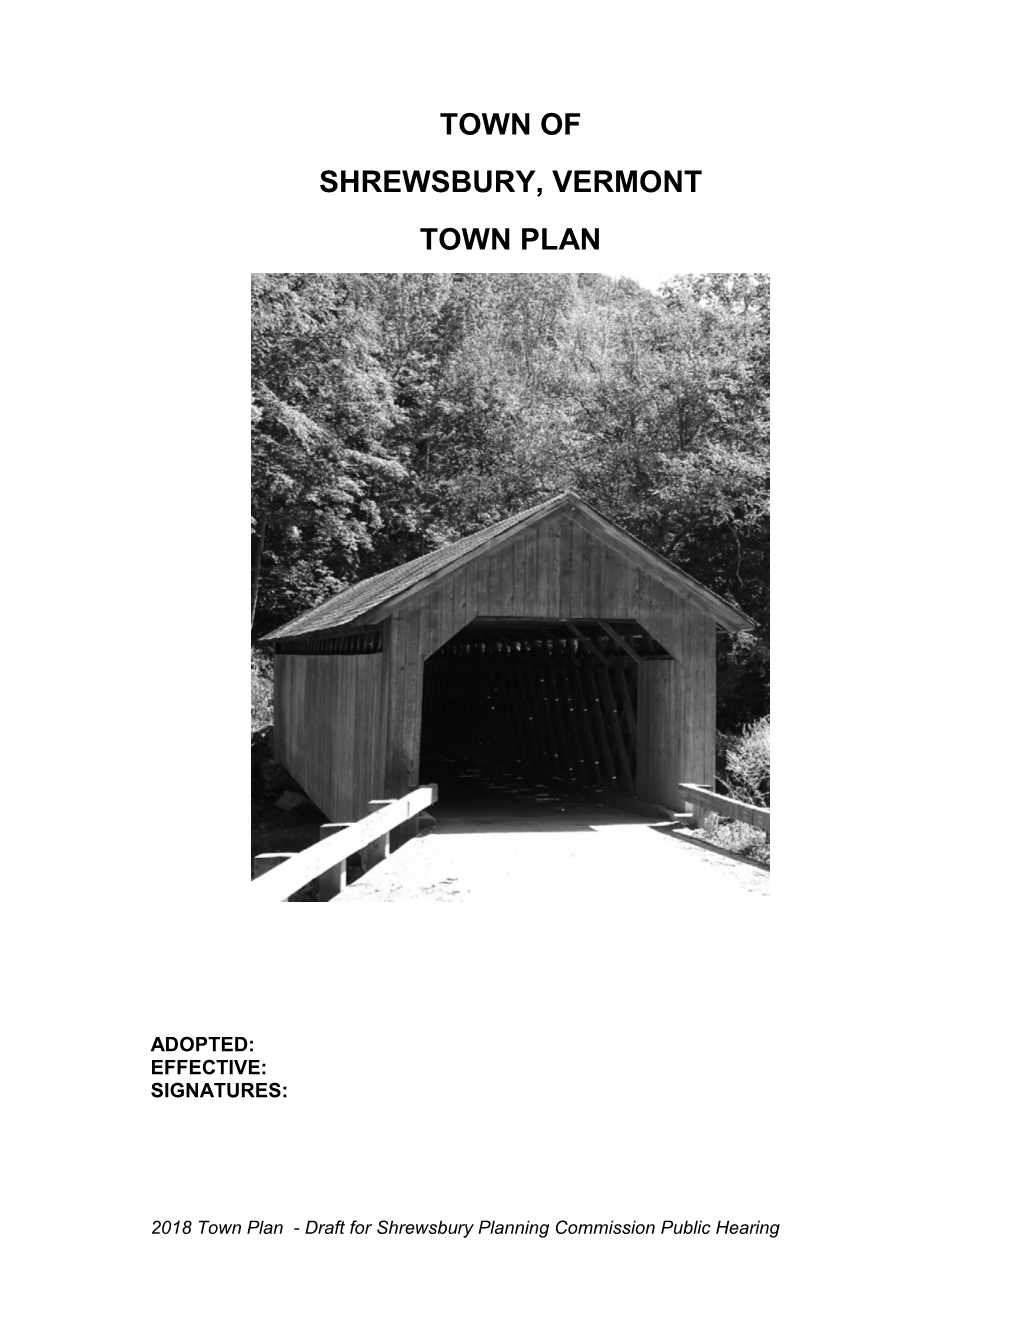 Town of Shrewsbury, Vermont Town Plan